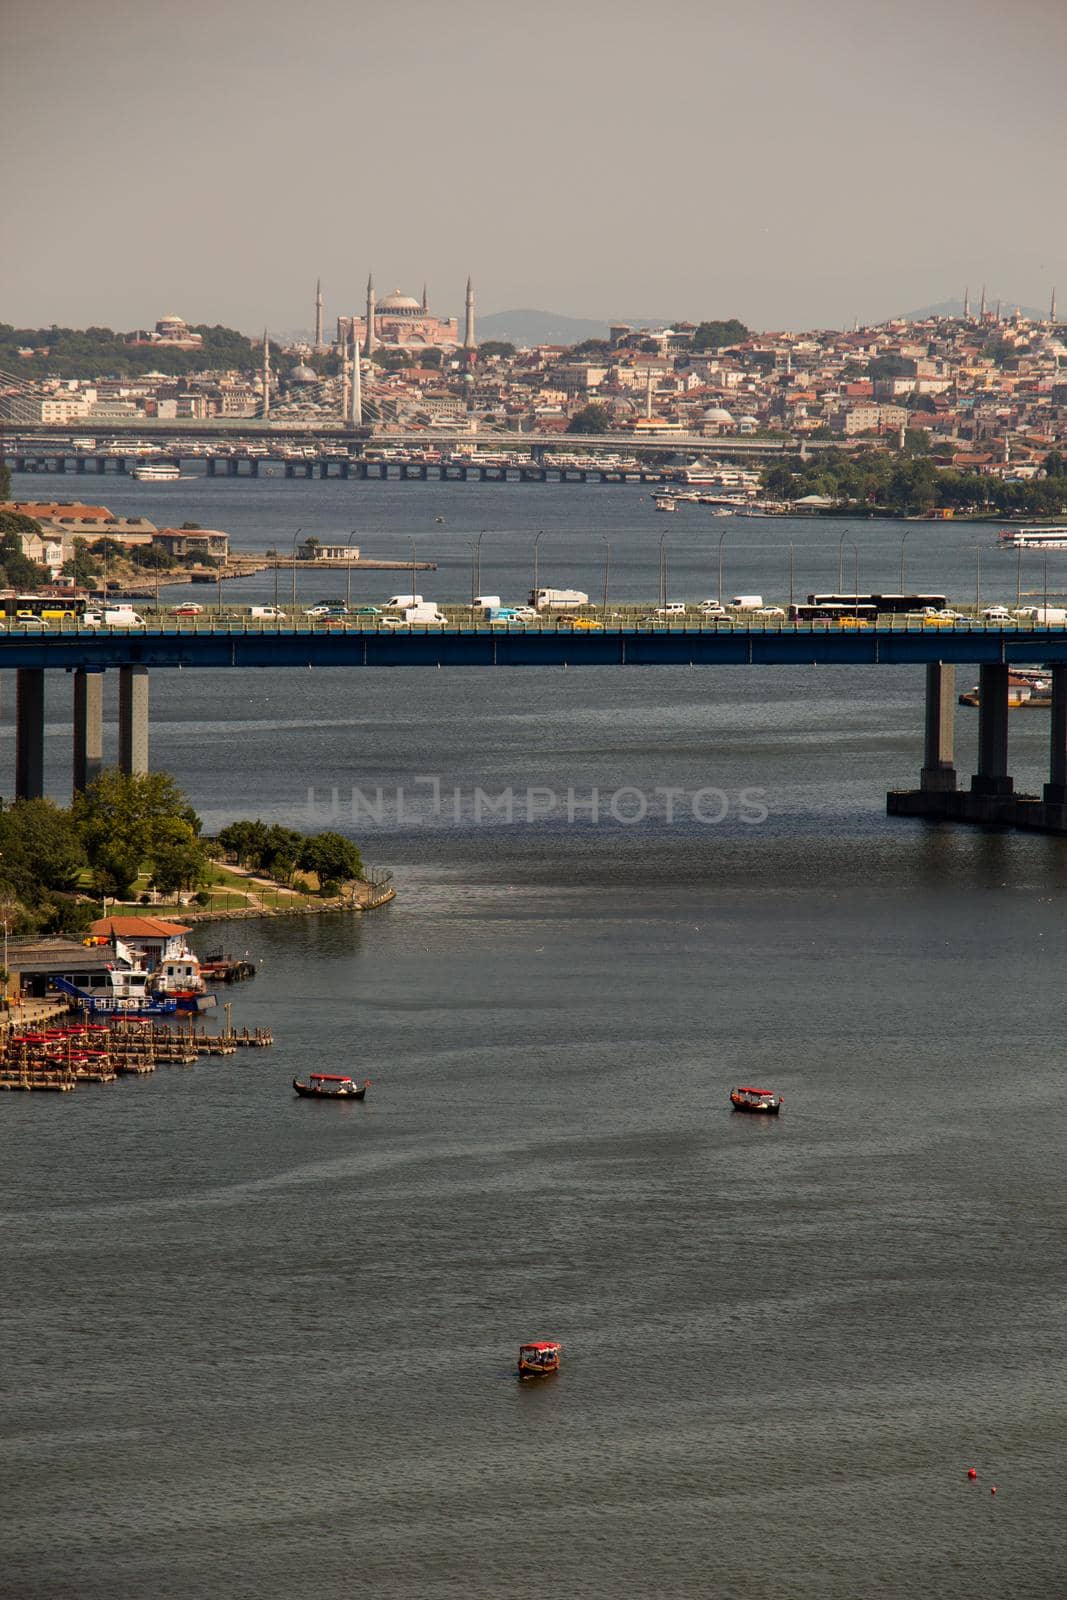 Eyup bridge in Golden horn in the view, Istanbul, Turkey